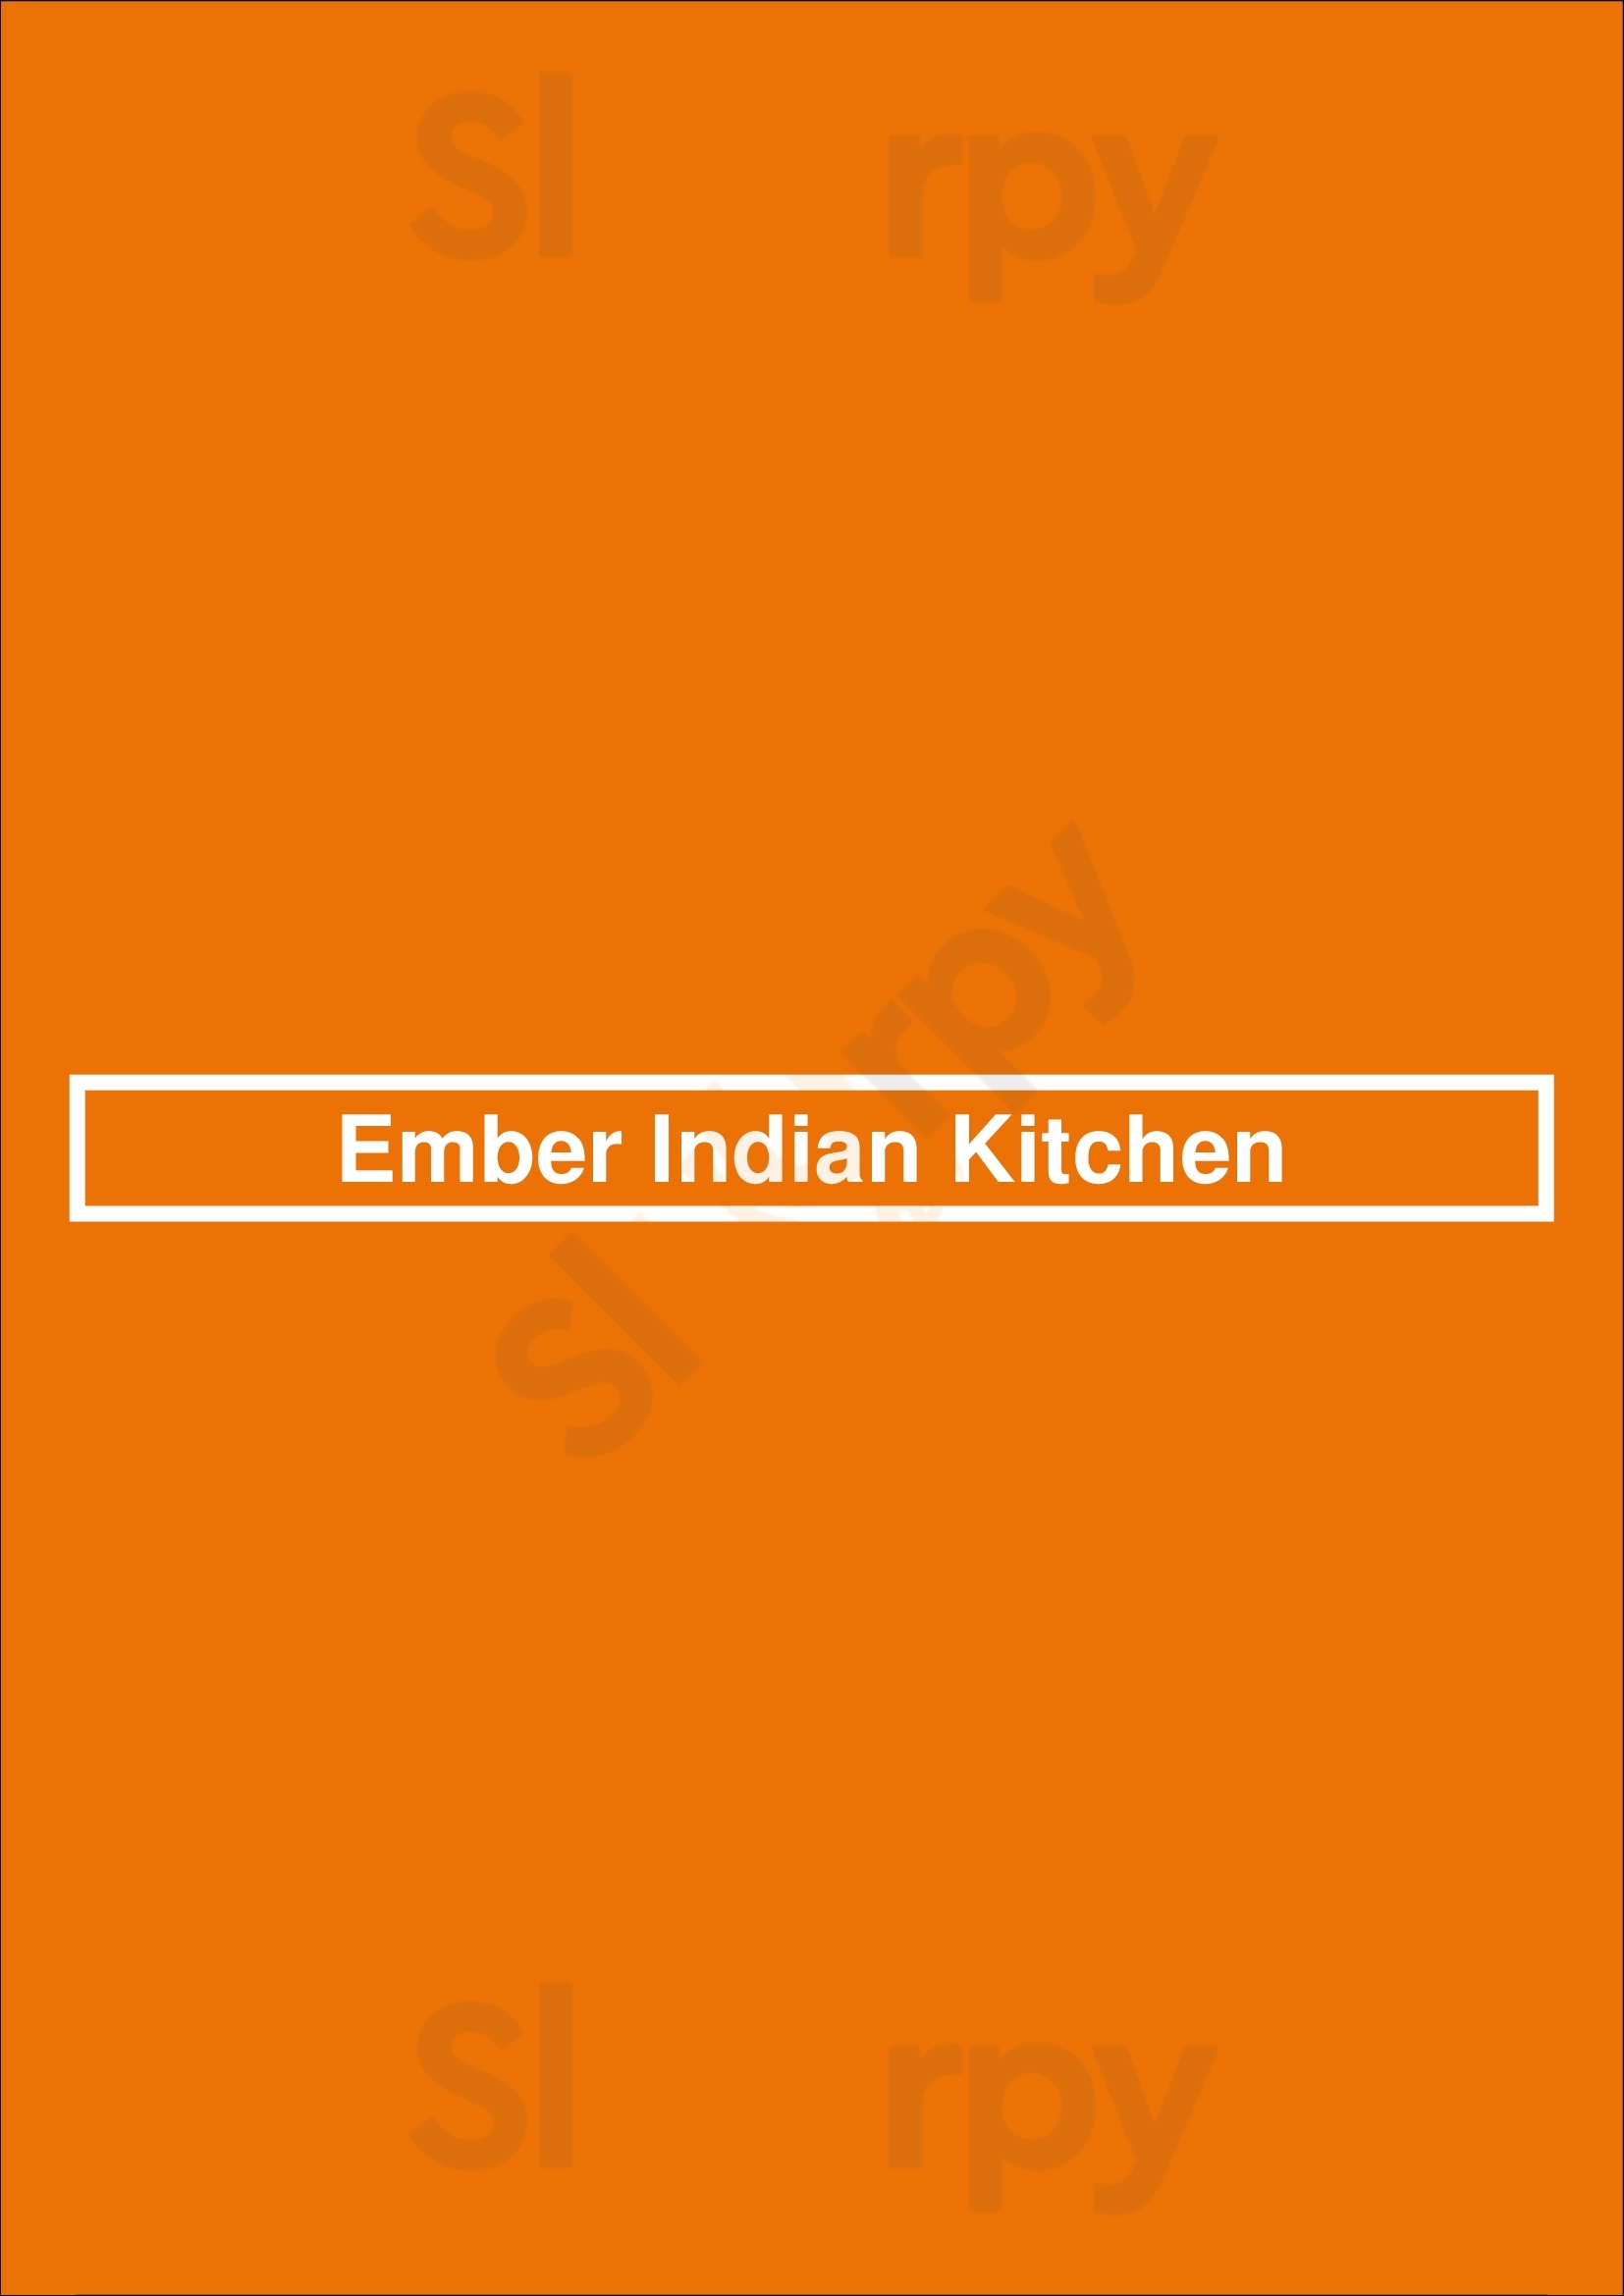 Ember Indian Kitchen Richmond Menu - 1